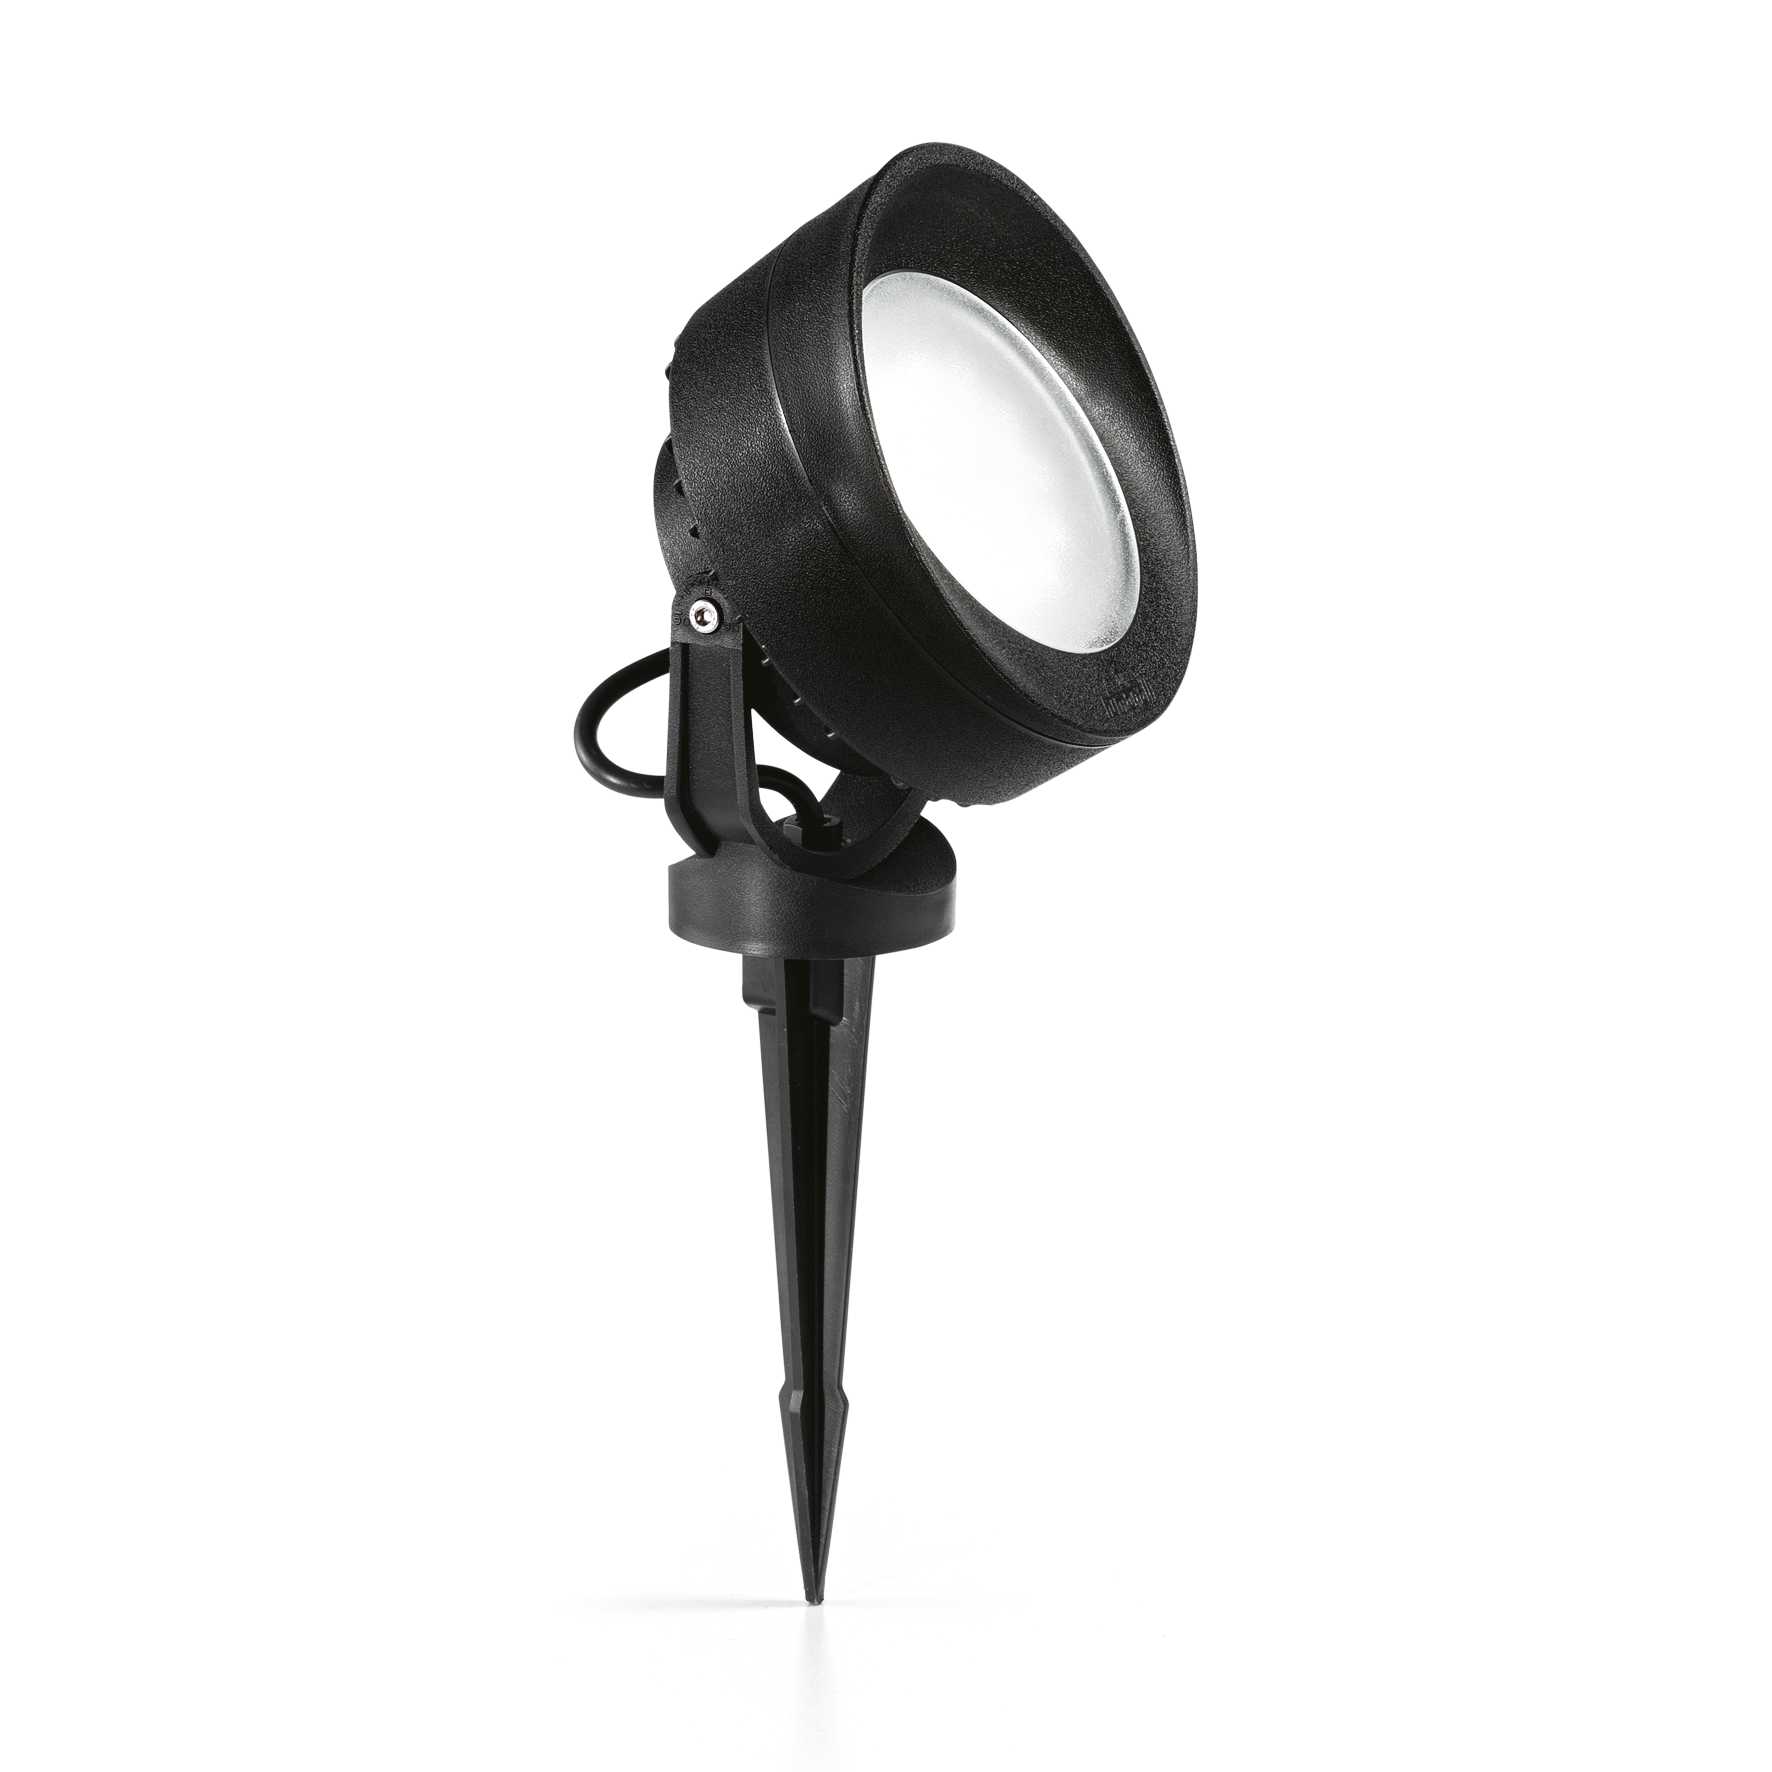 AD hotelska oprema Reflektori vanjski Litio pr1- Crne boje slika proizvoda